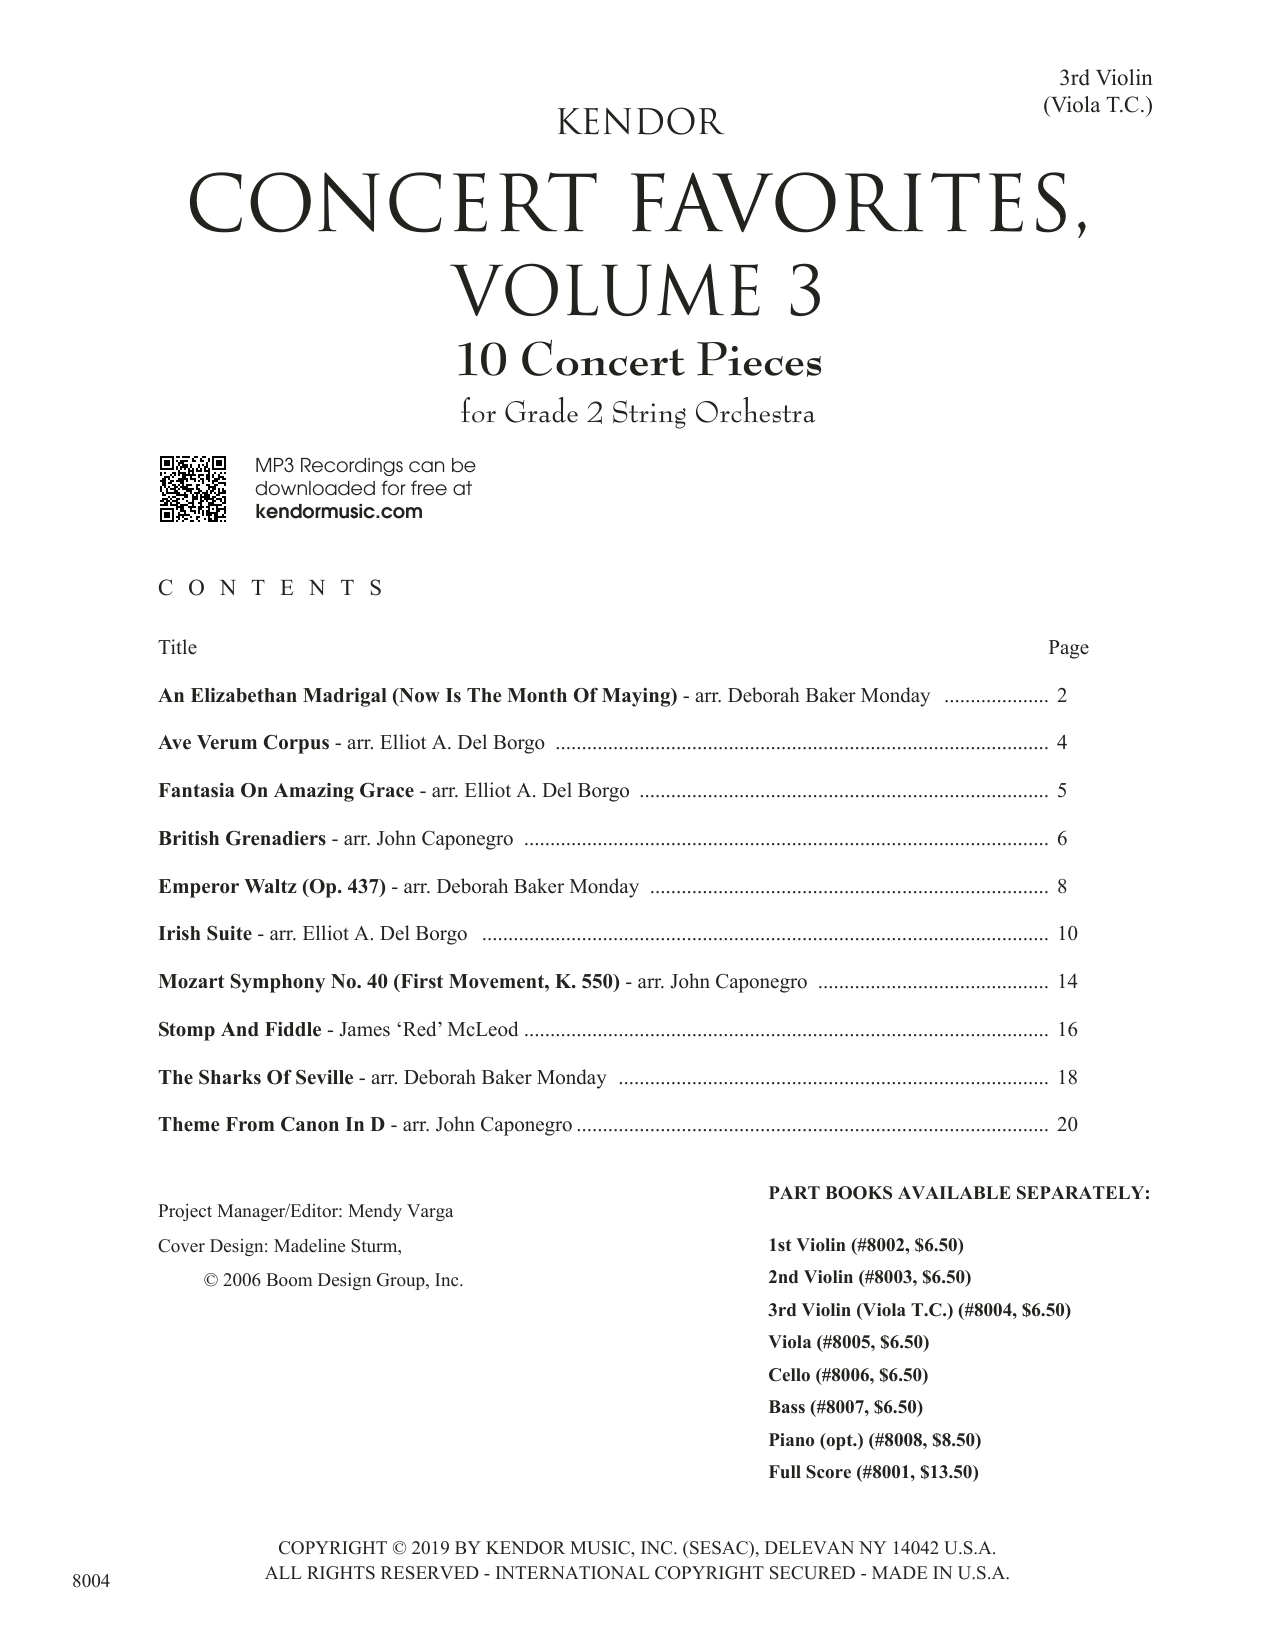 Download Various Kendor Concert Favorites, Volume 3 - 3r Sheet Music